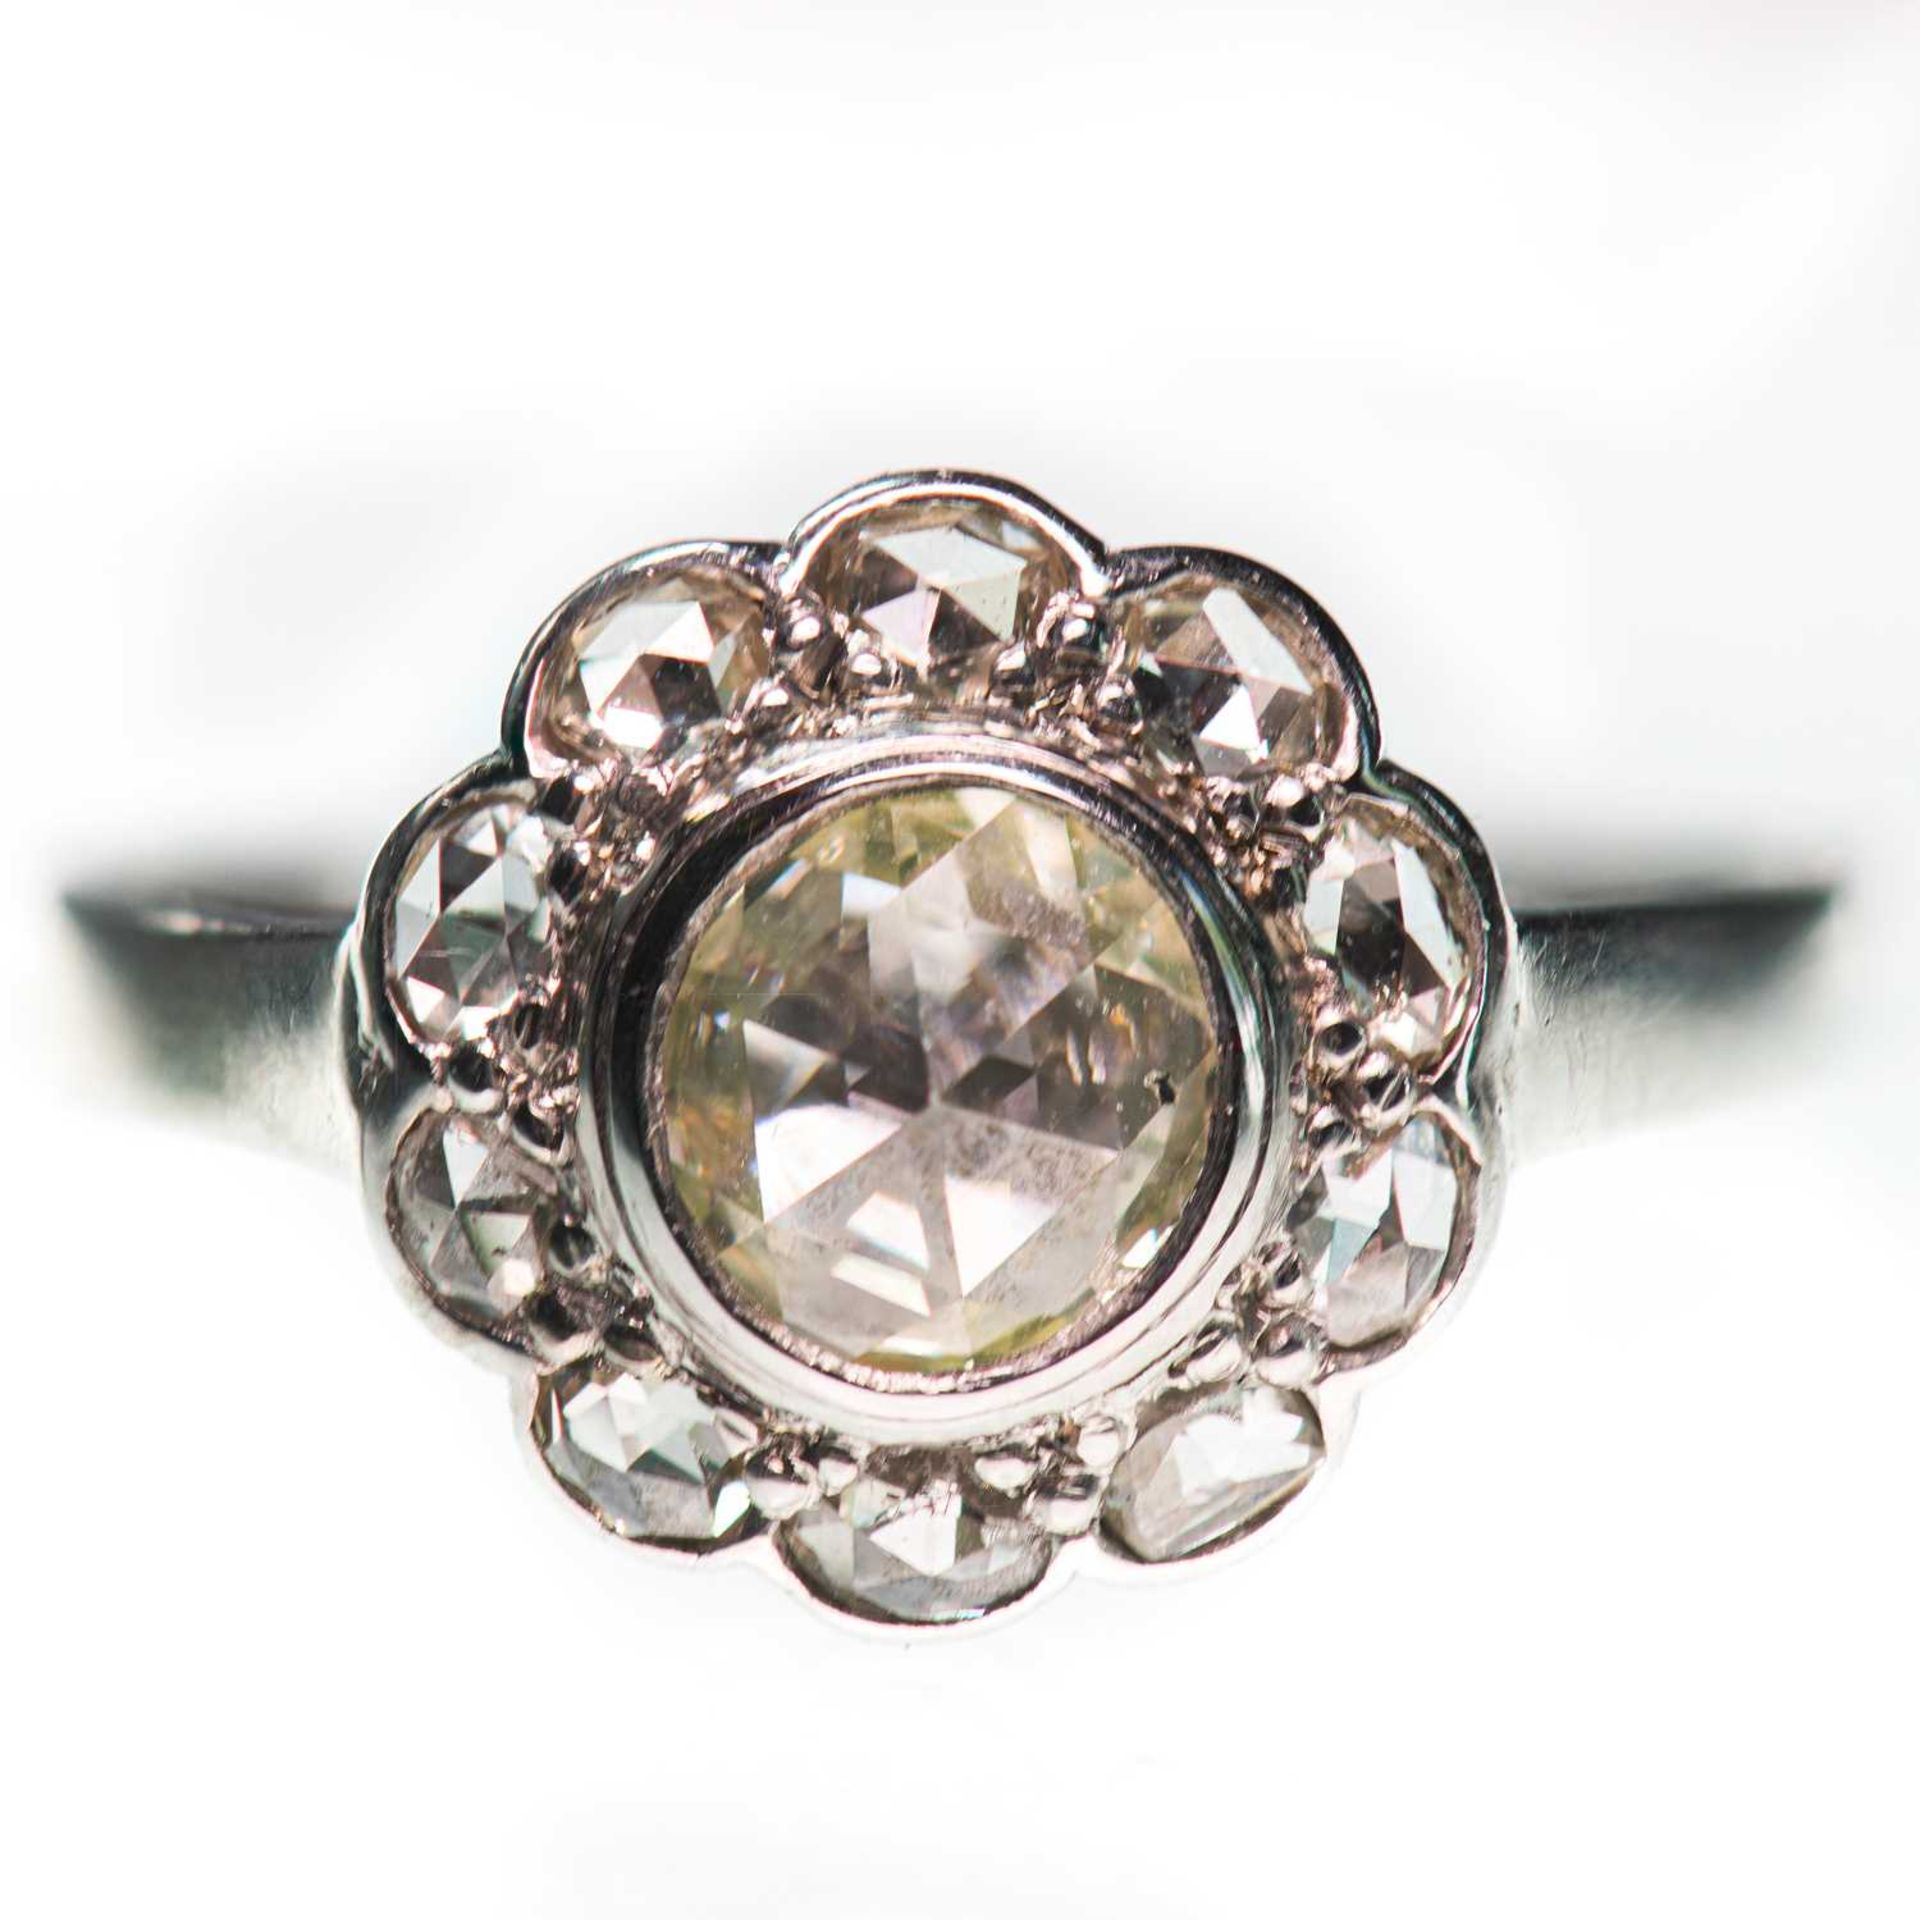 A ROSE-CUT DIAMOND CLUSTER RING